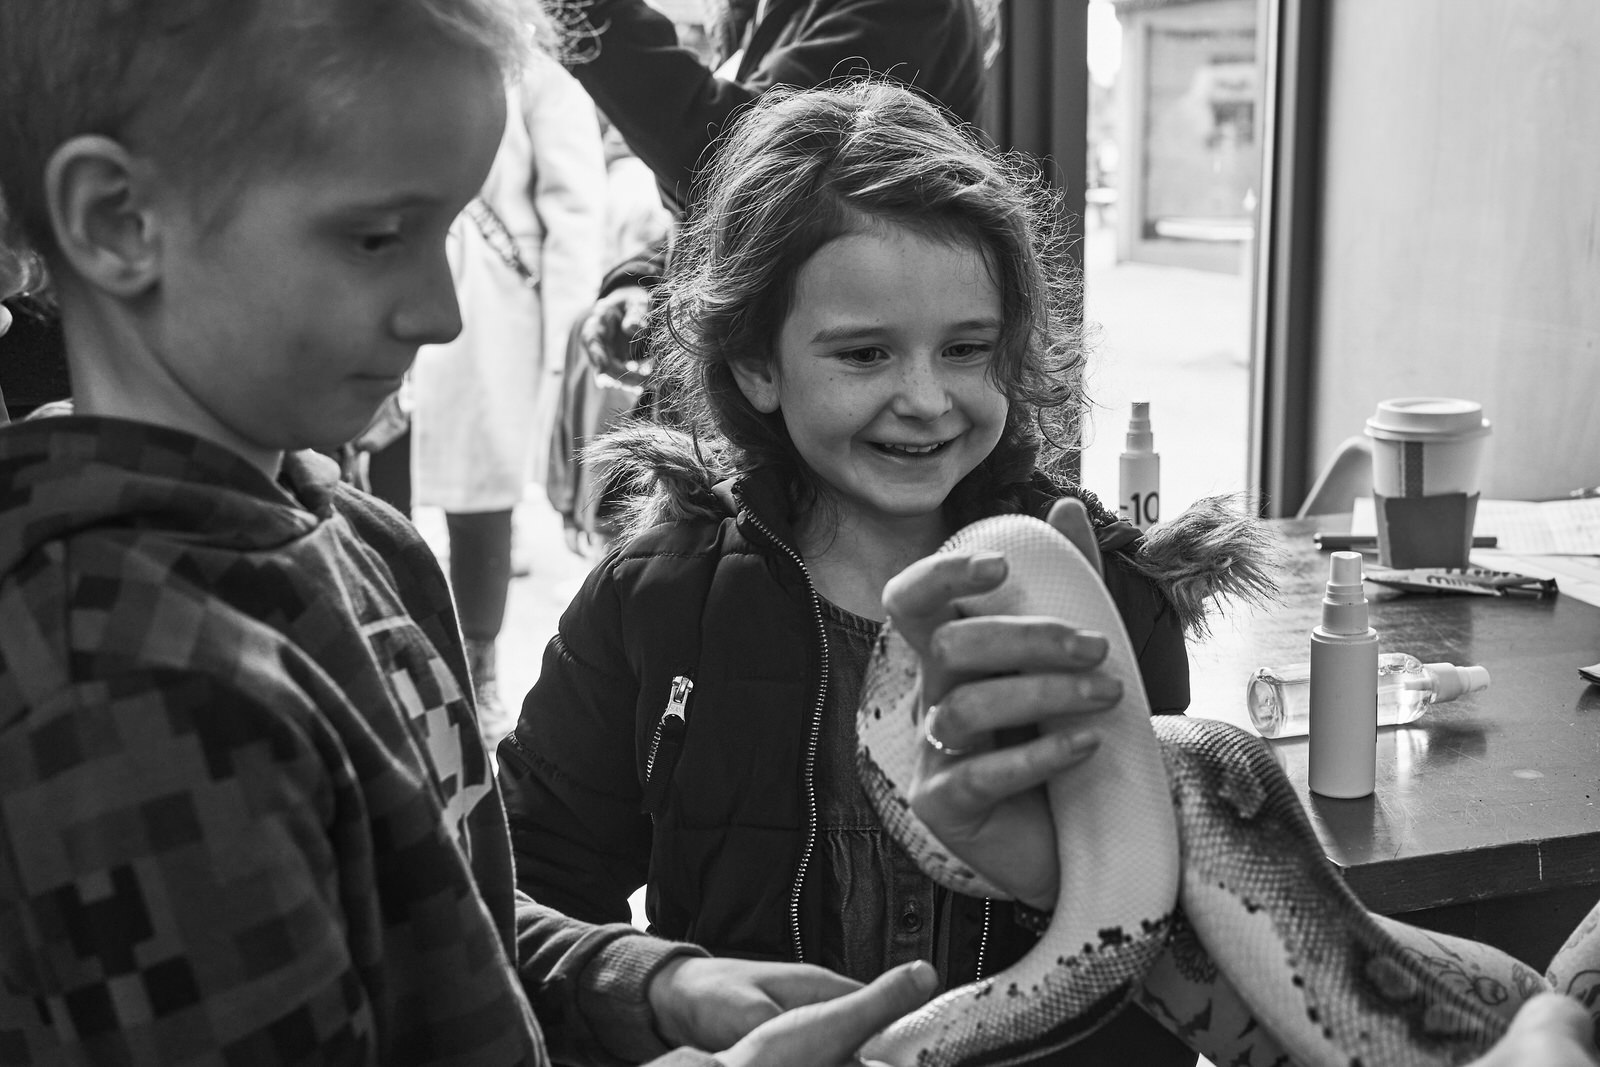 two kids smile at a royal python being displayed at Brockholes